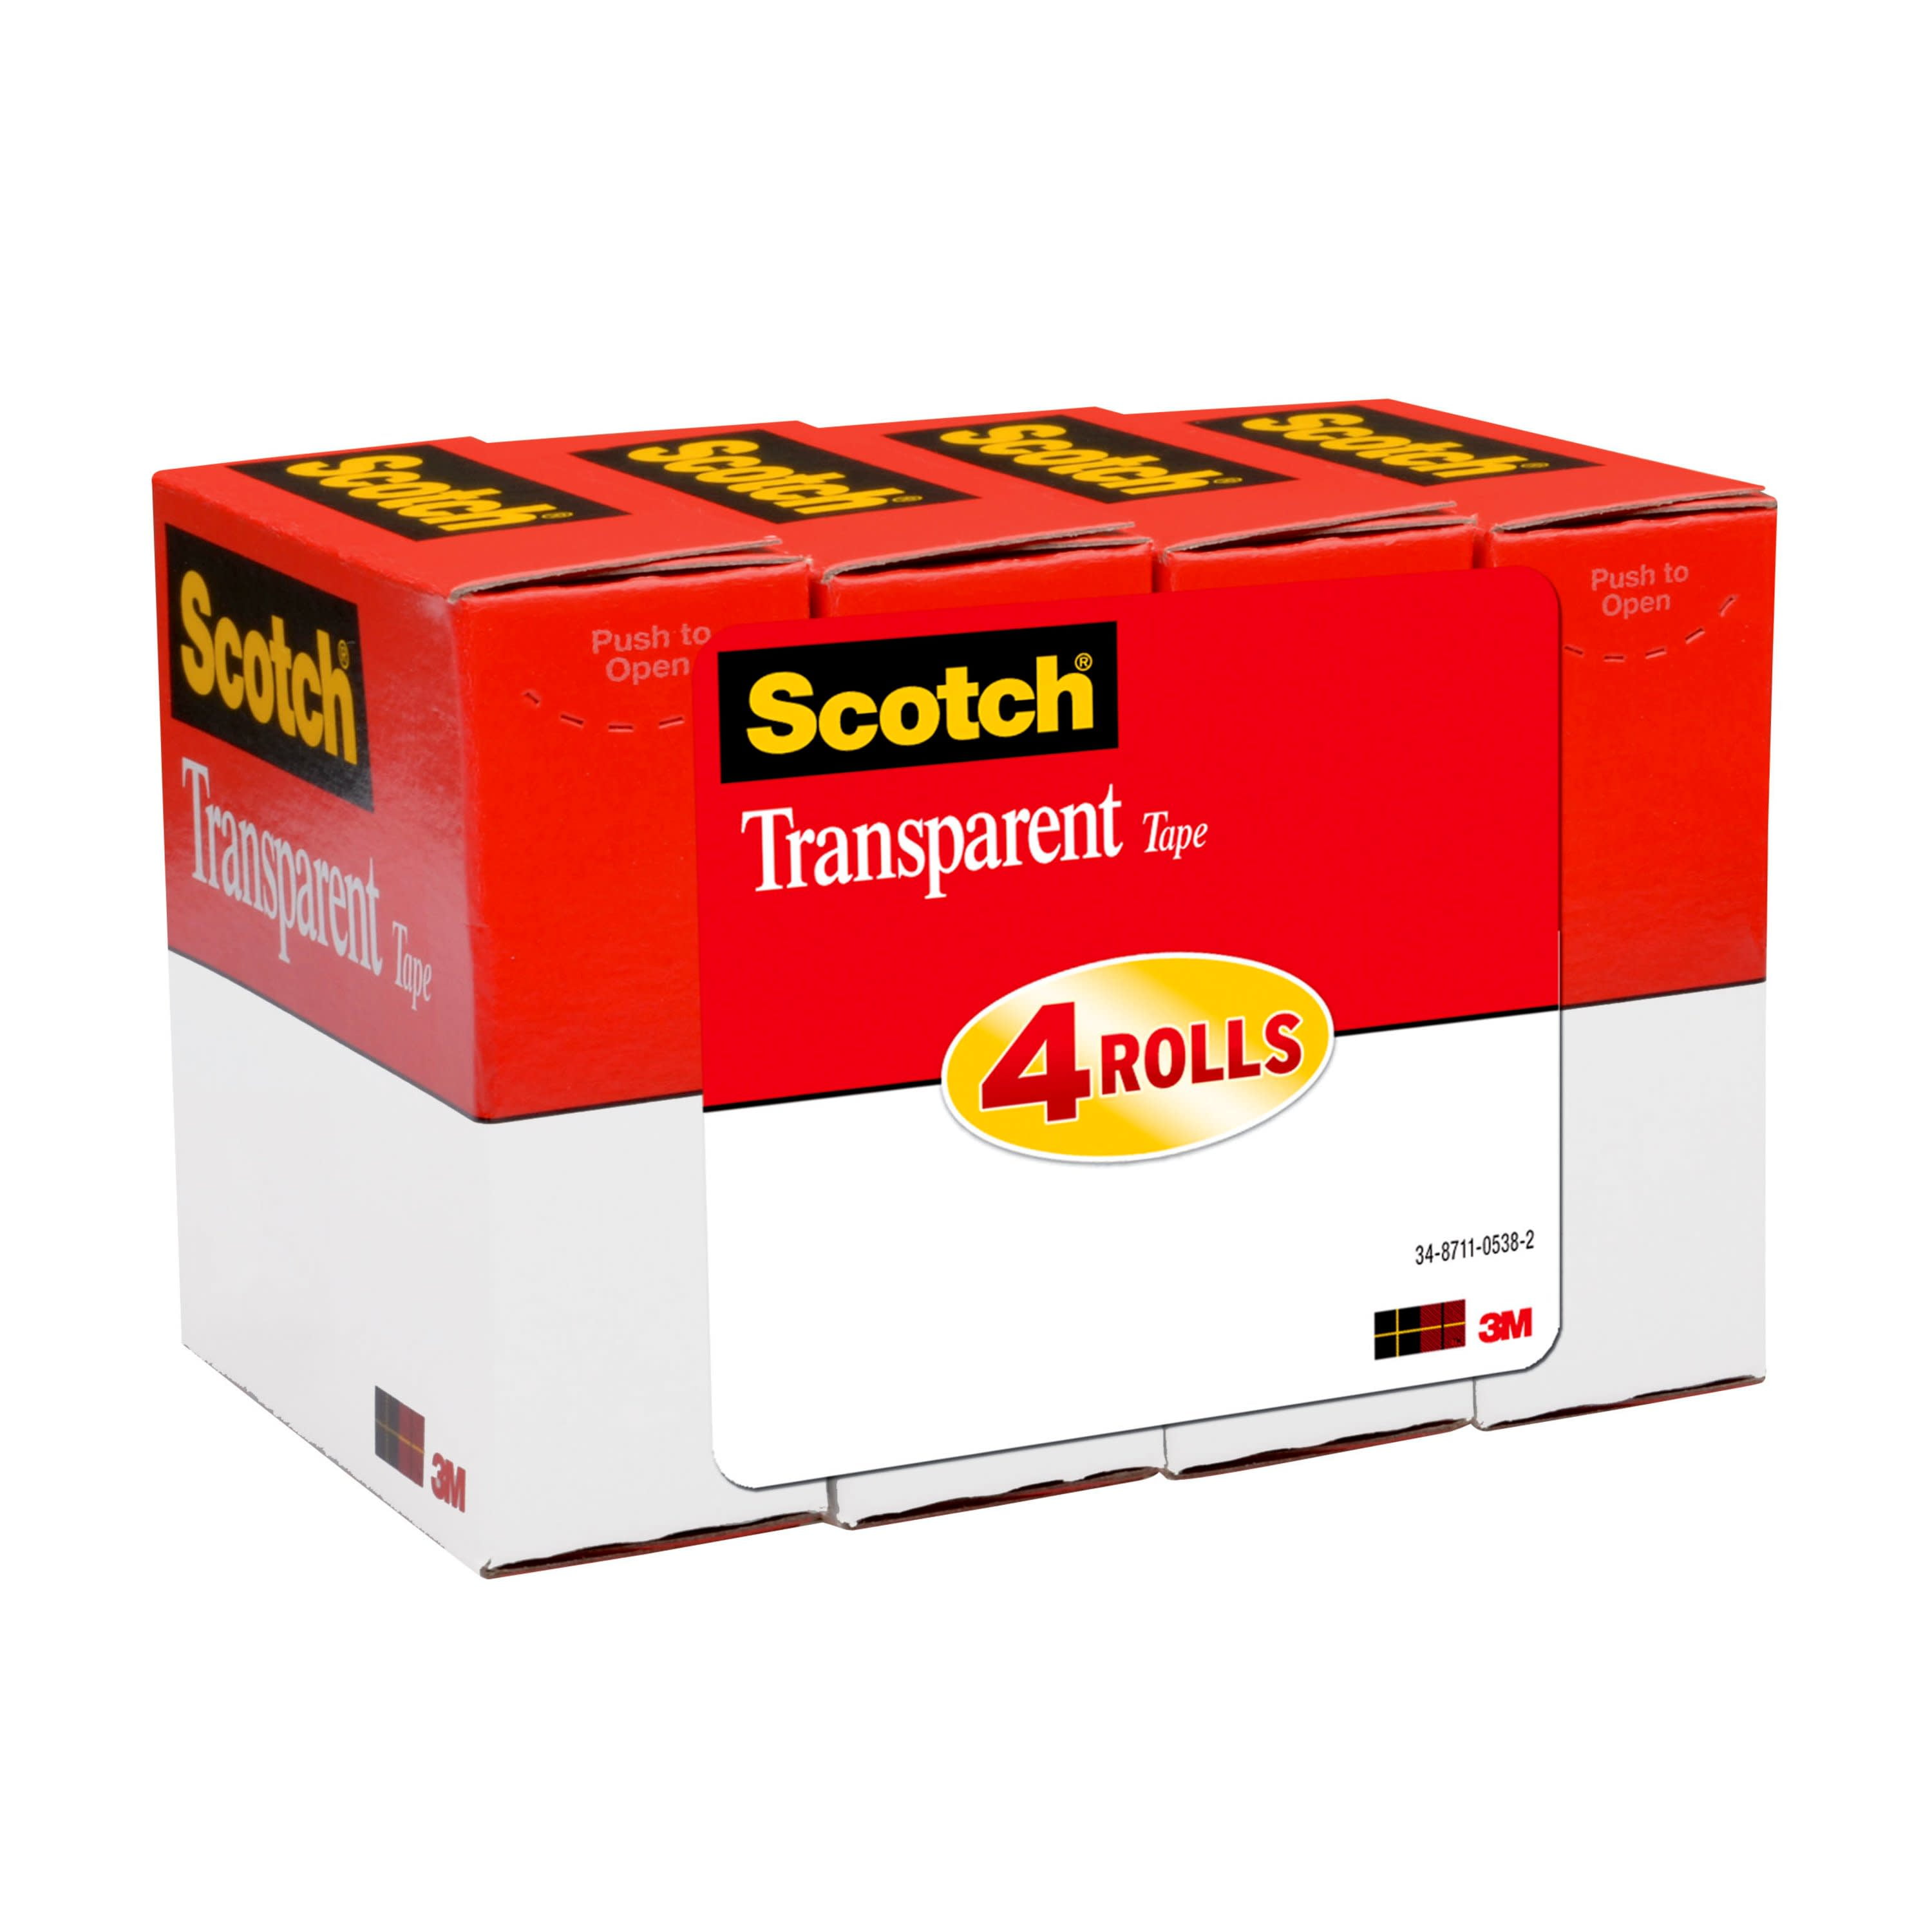 Scotch Tape, Wall-Safe - 2 rolls